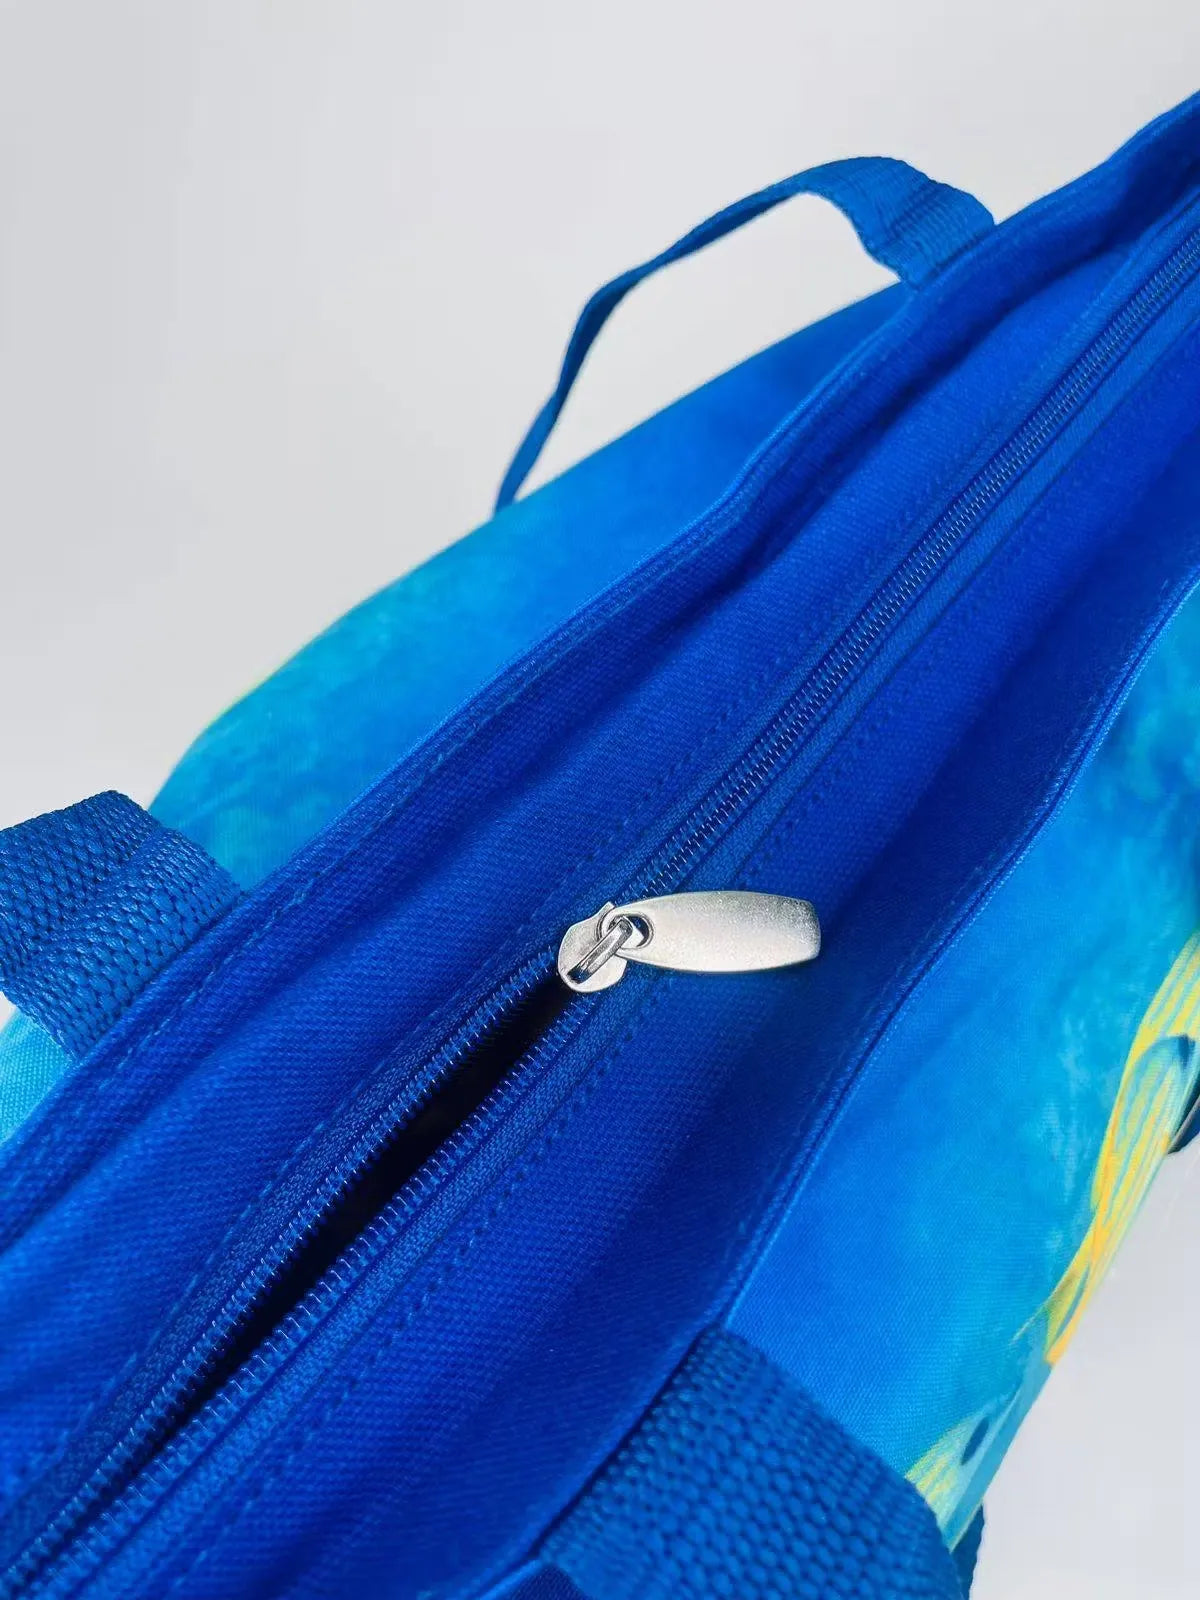 Dubai Aquarium Tote Bag: Blue and white tote bag featuring colorful fish and coral reef design.